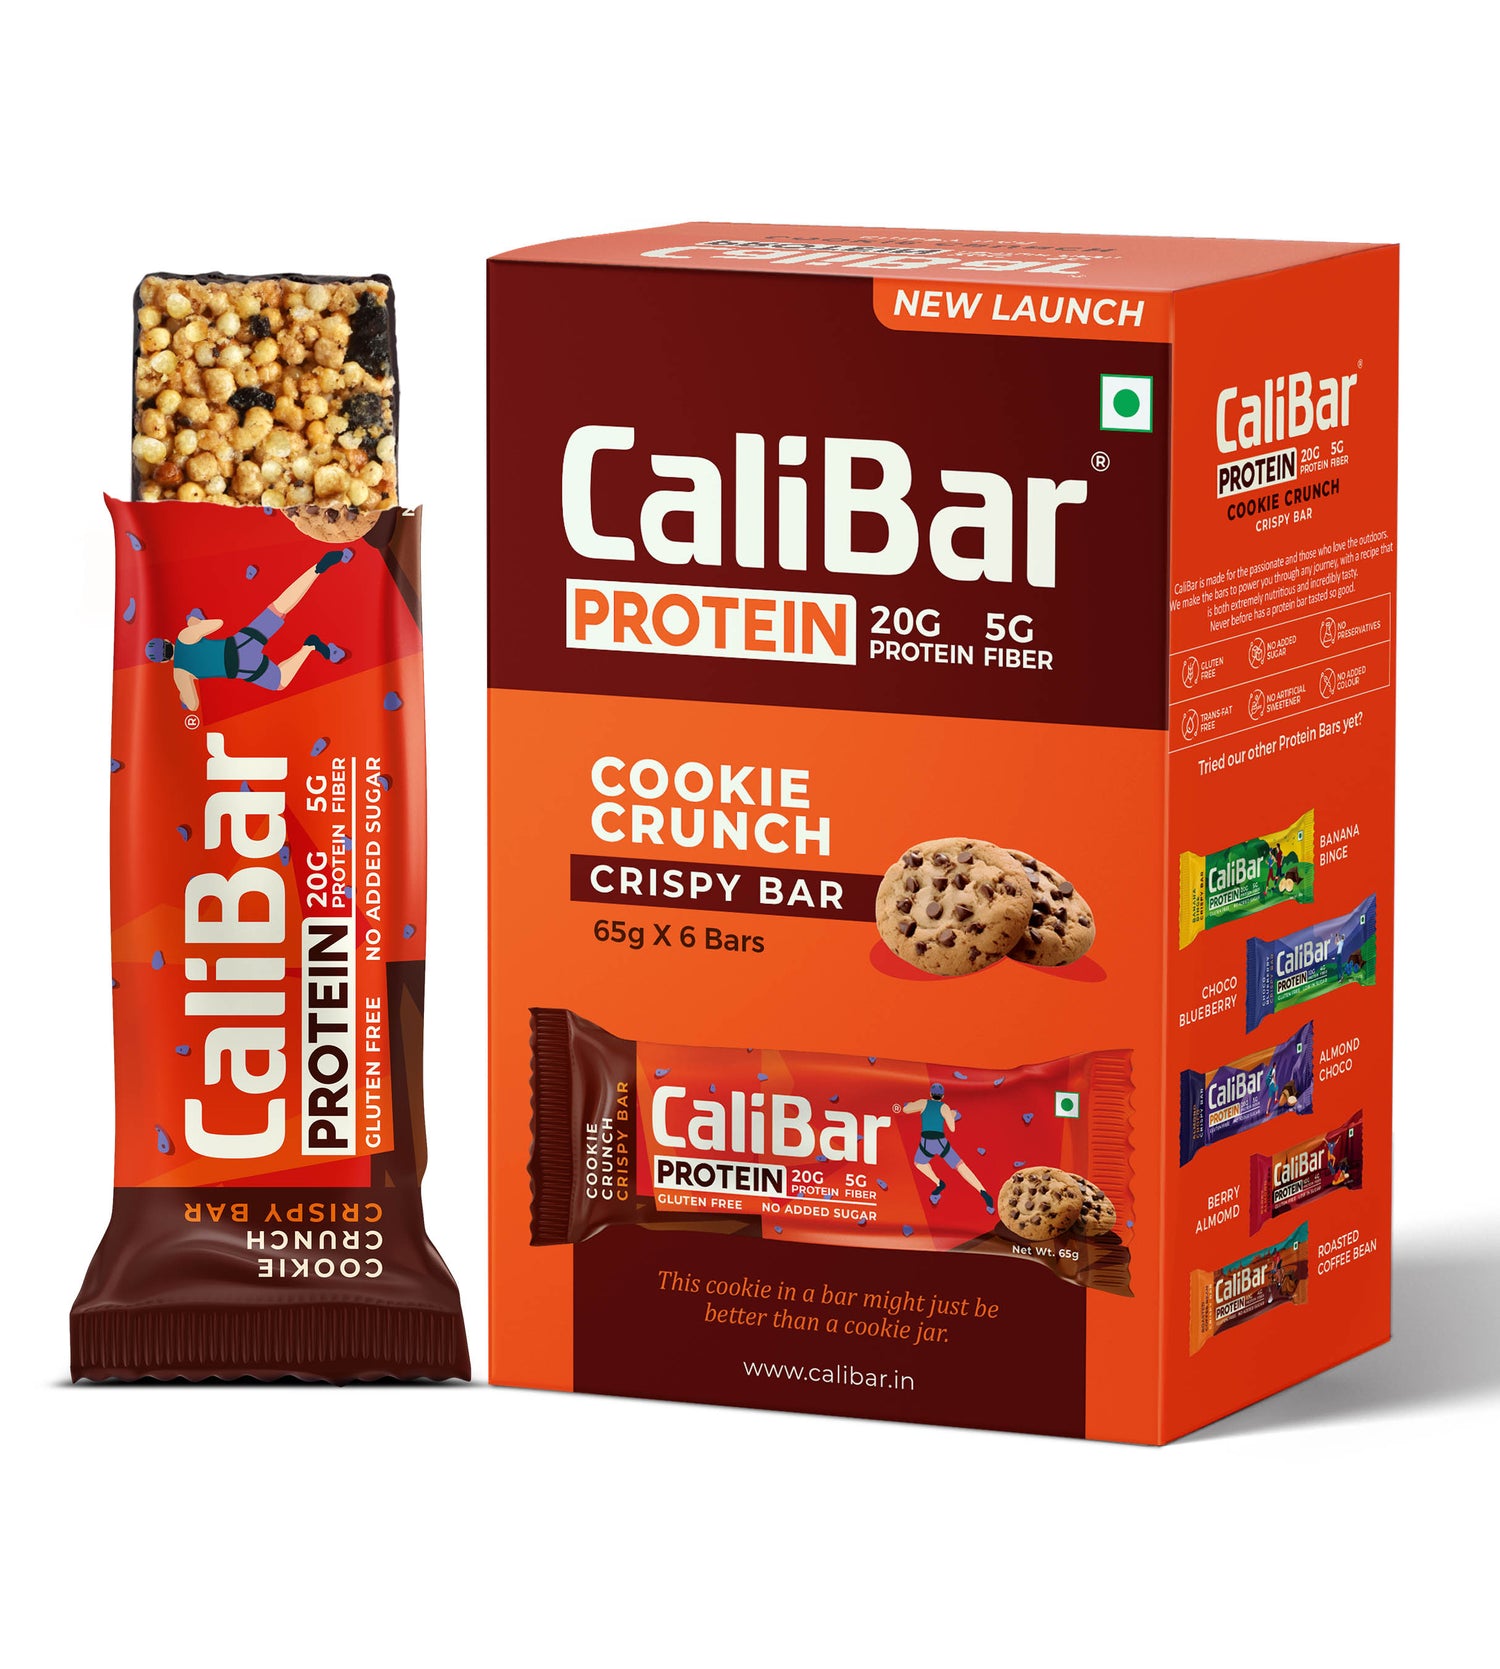 CaliBar 20g Protein Bar - Cookie Crunch Crispy Bar (Pack of 6)